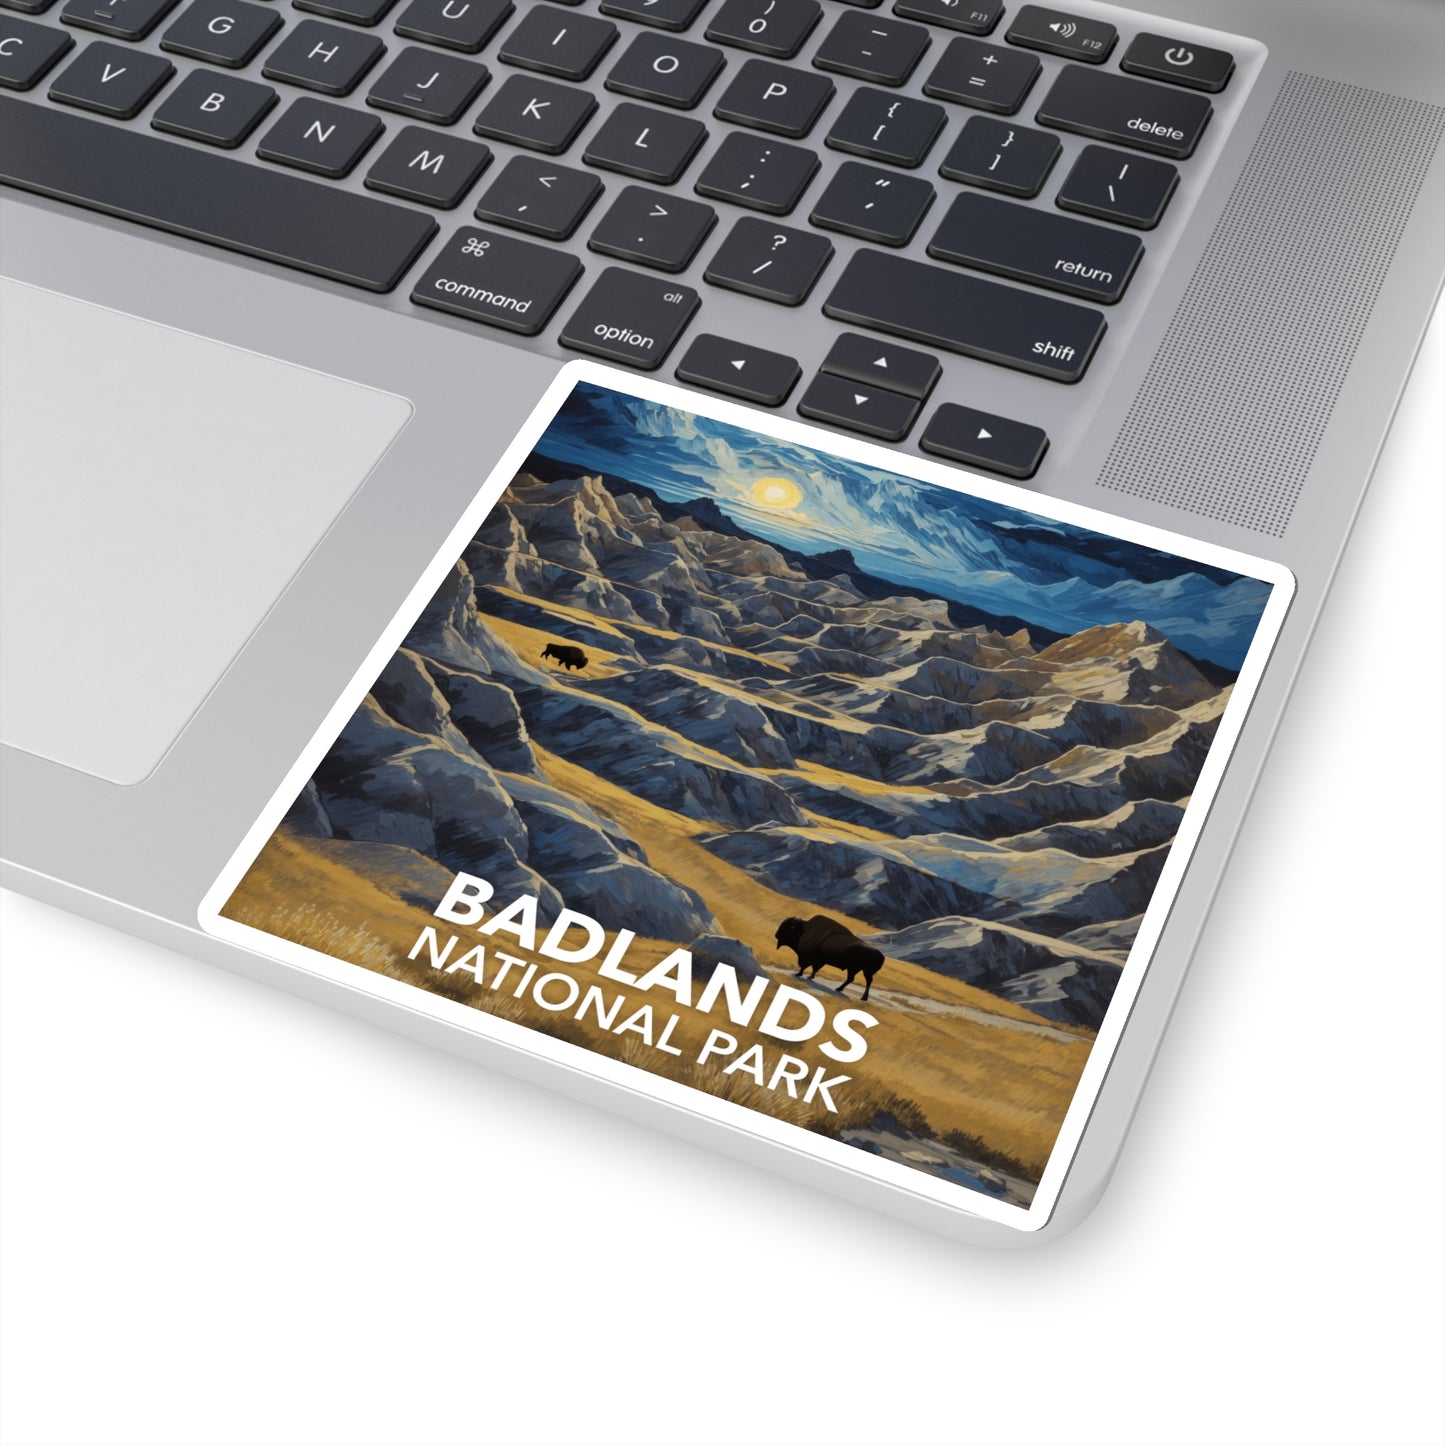 Badlands National Park Sticker - The Starry Night